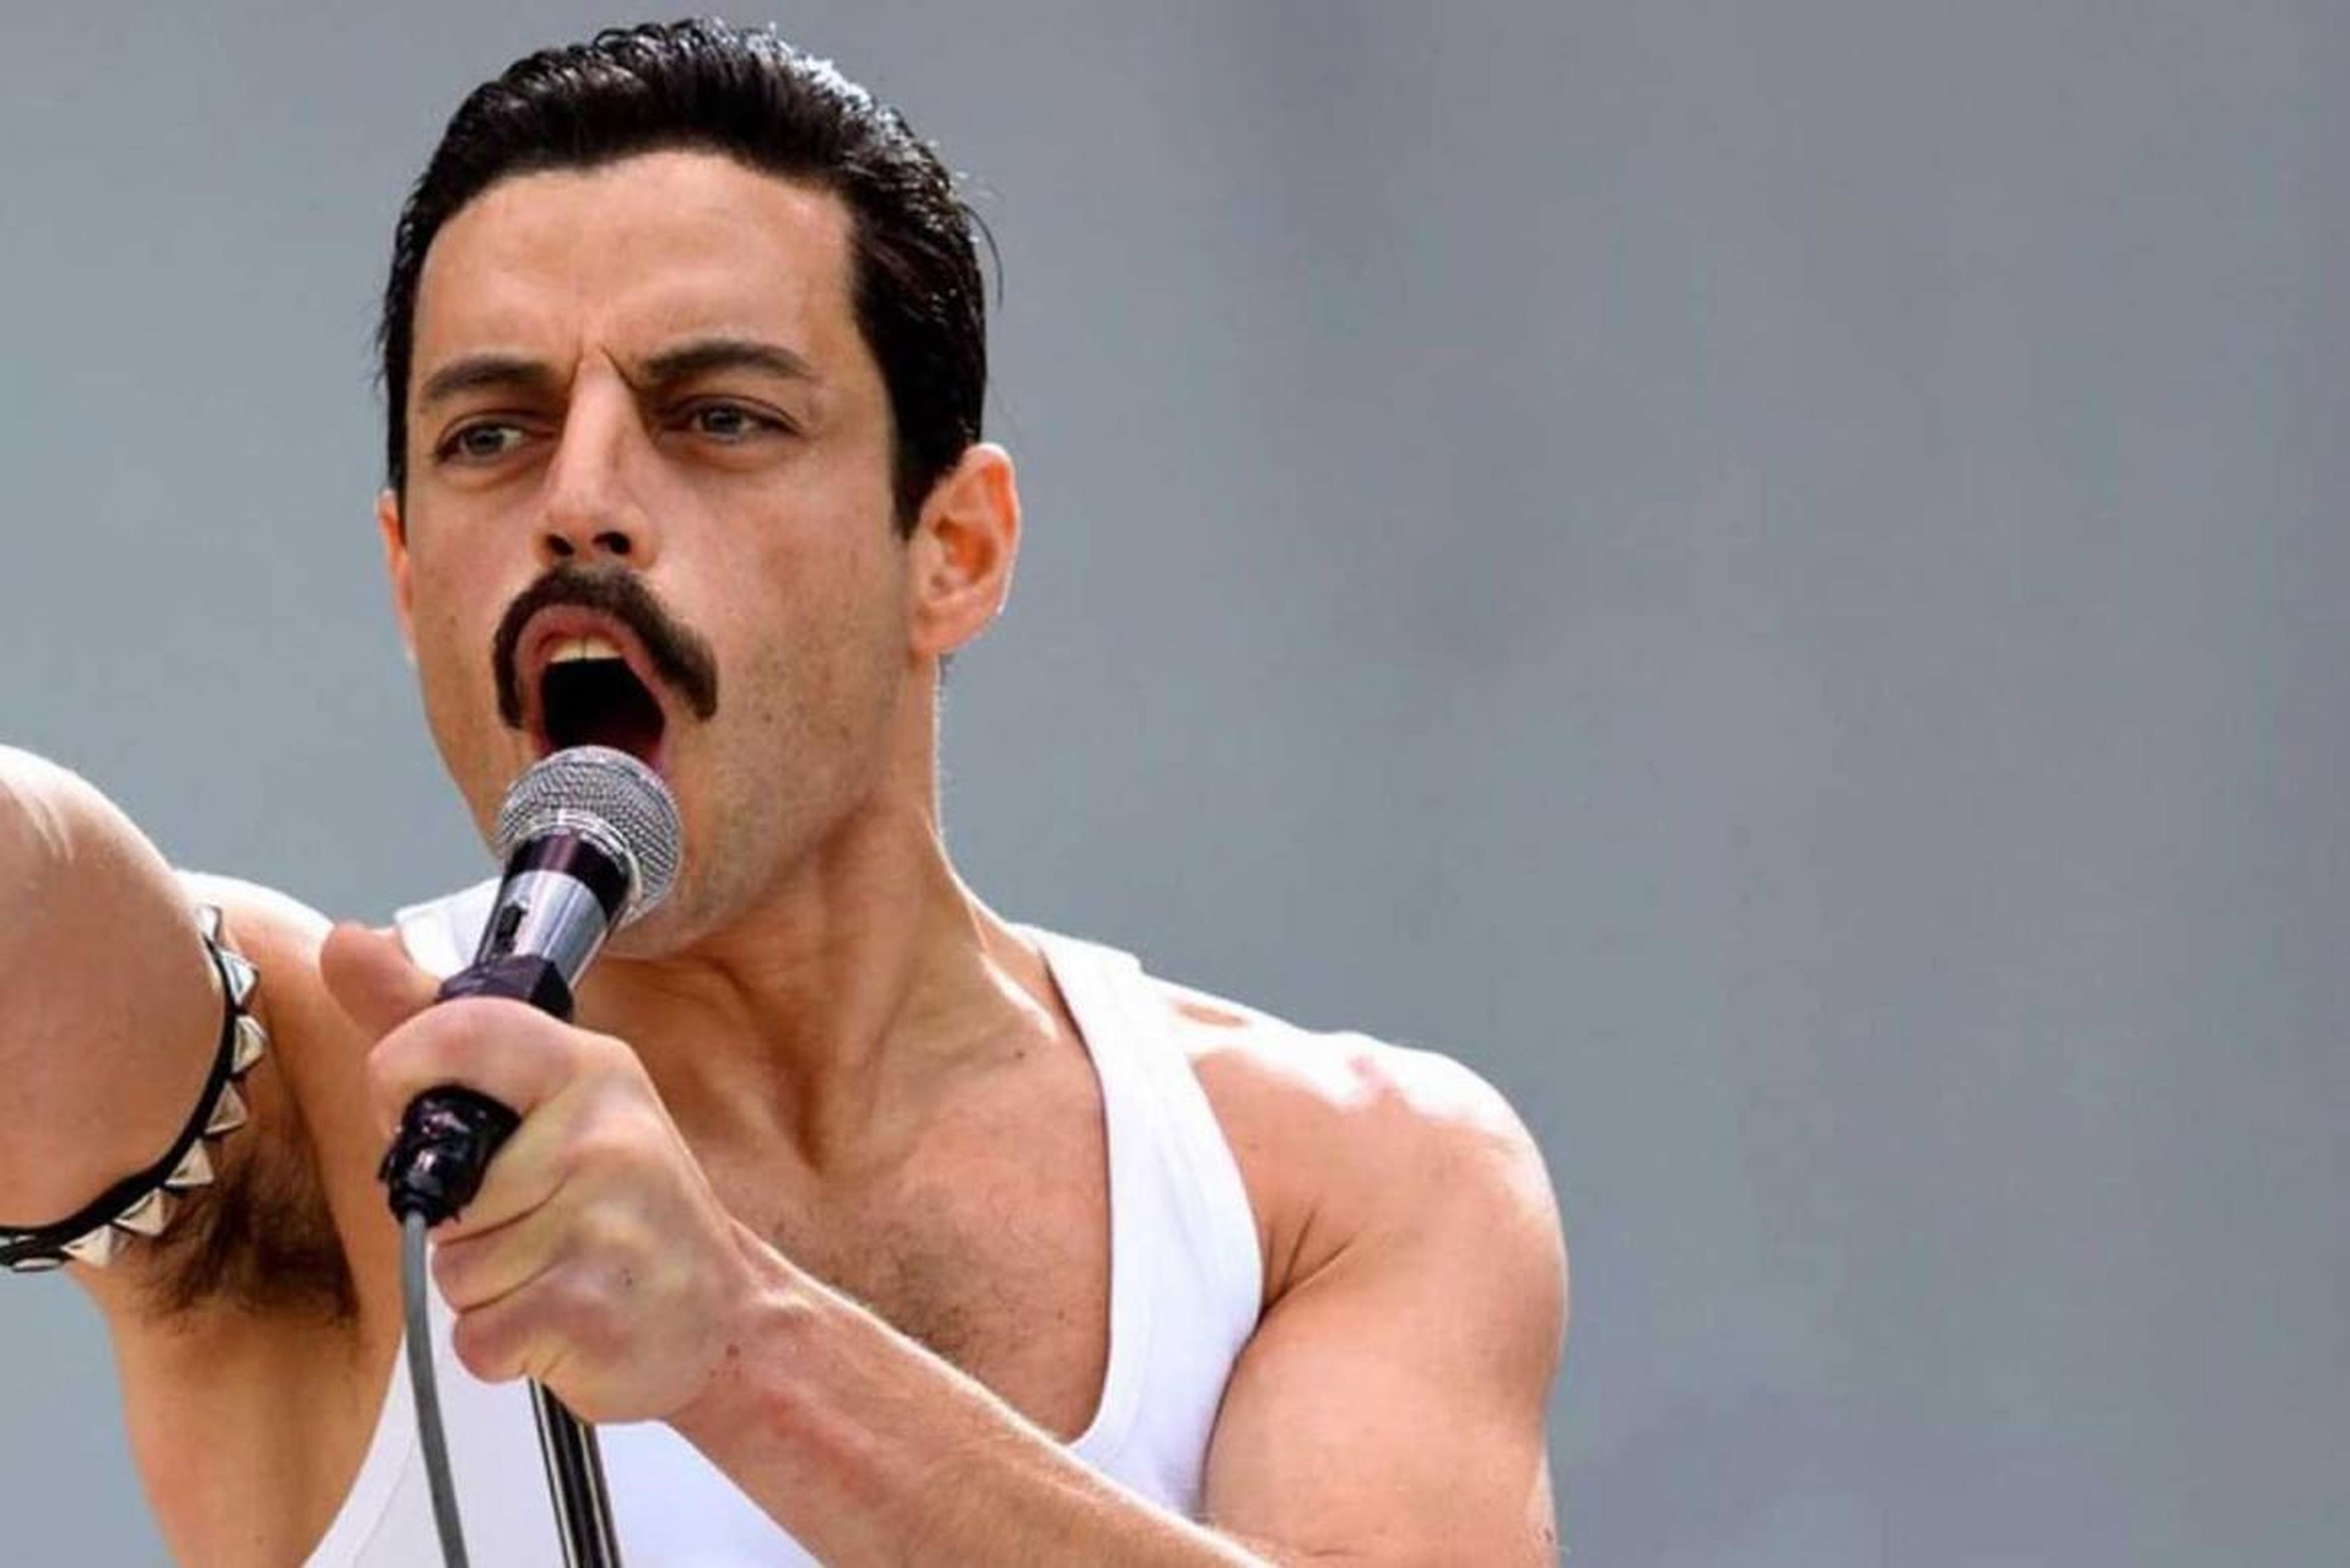 Rami Malek in "Bohemian Rhapsody."